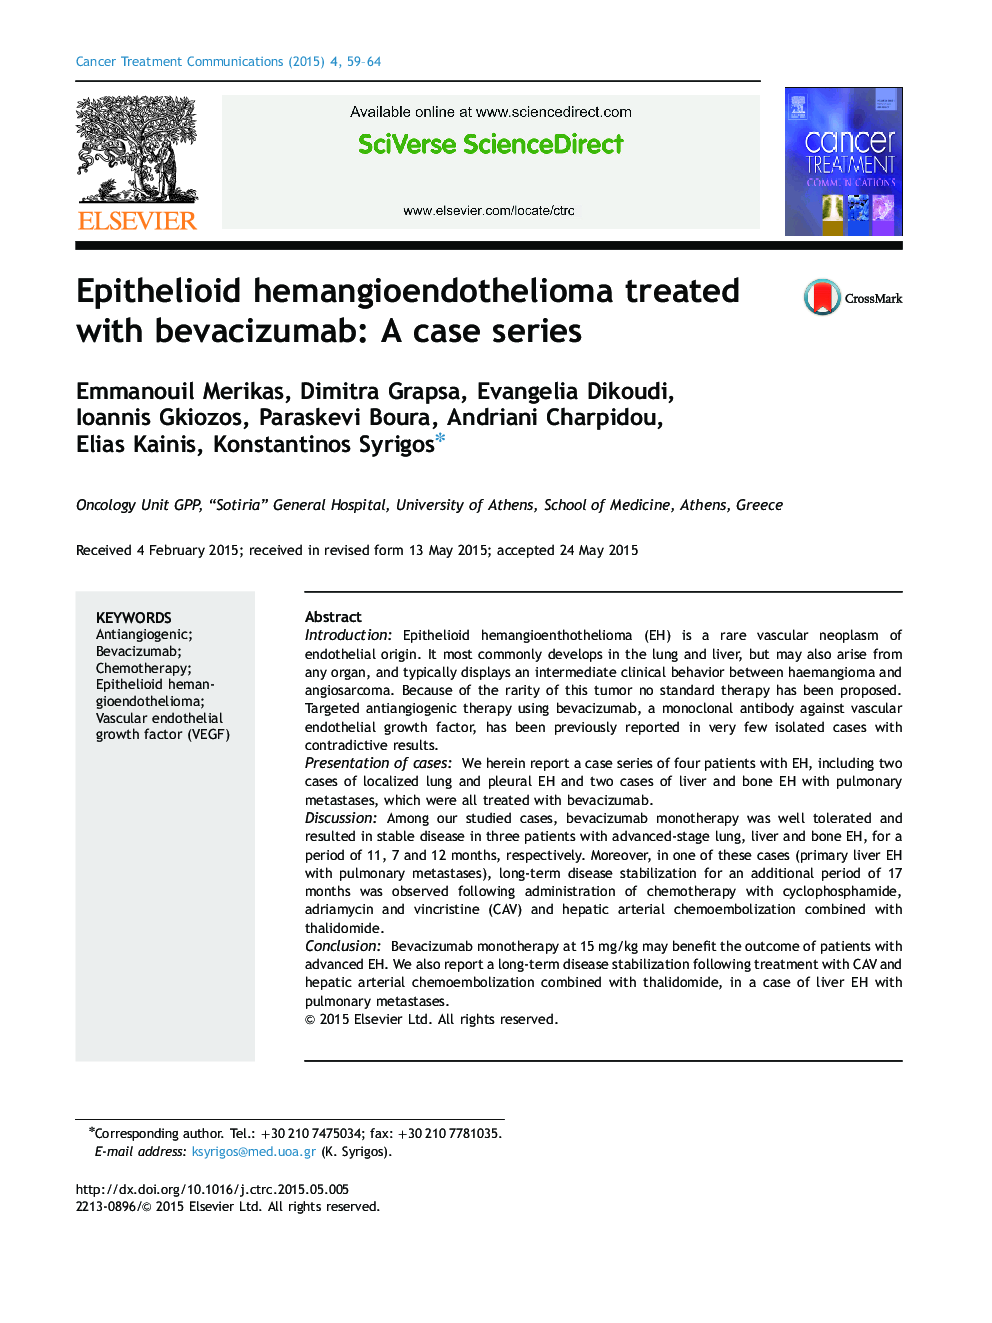 Epithelioid hemangioendothelioma treated with bevacizumab: A case series